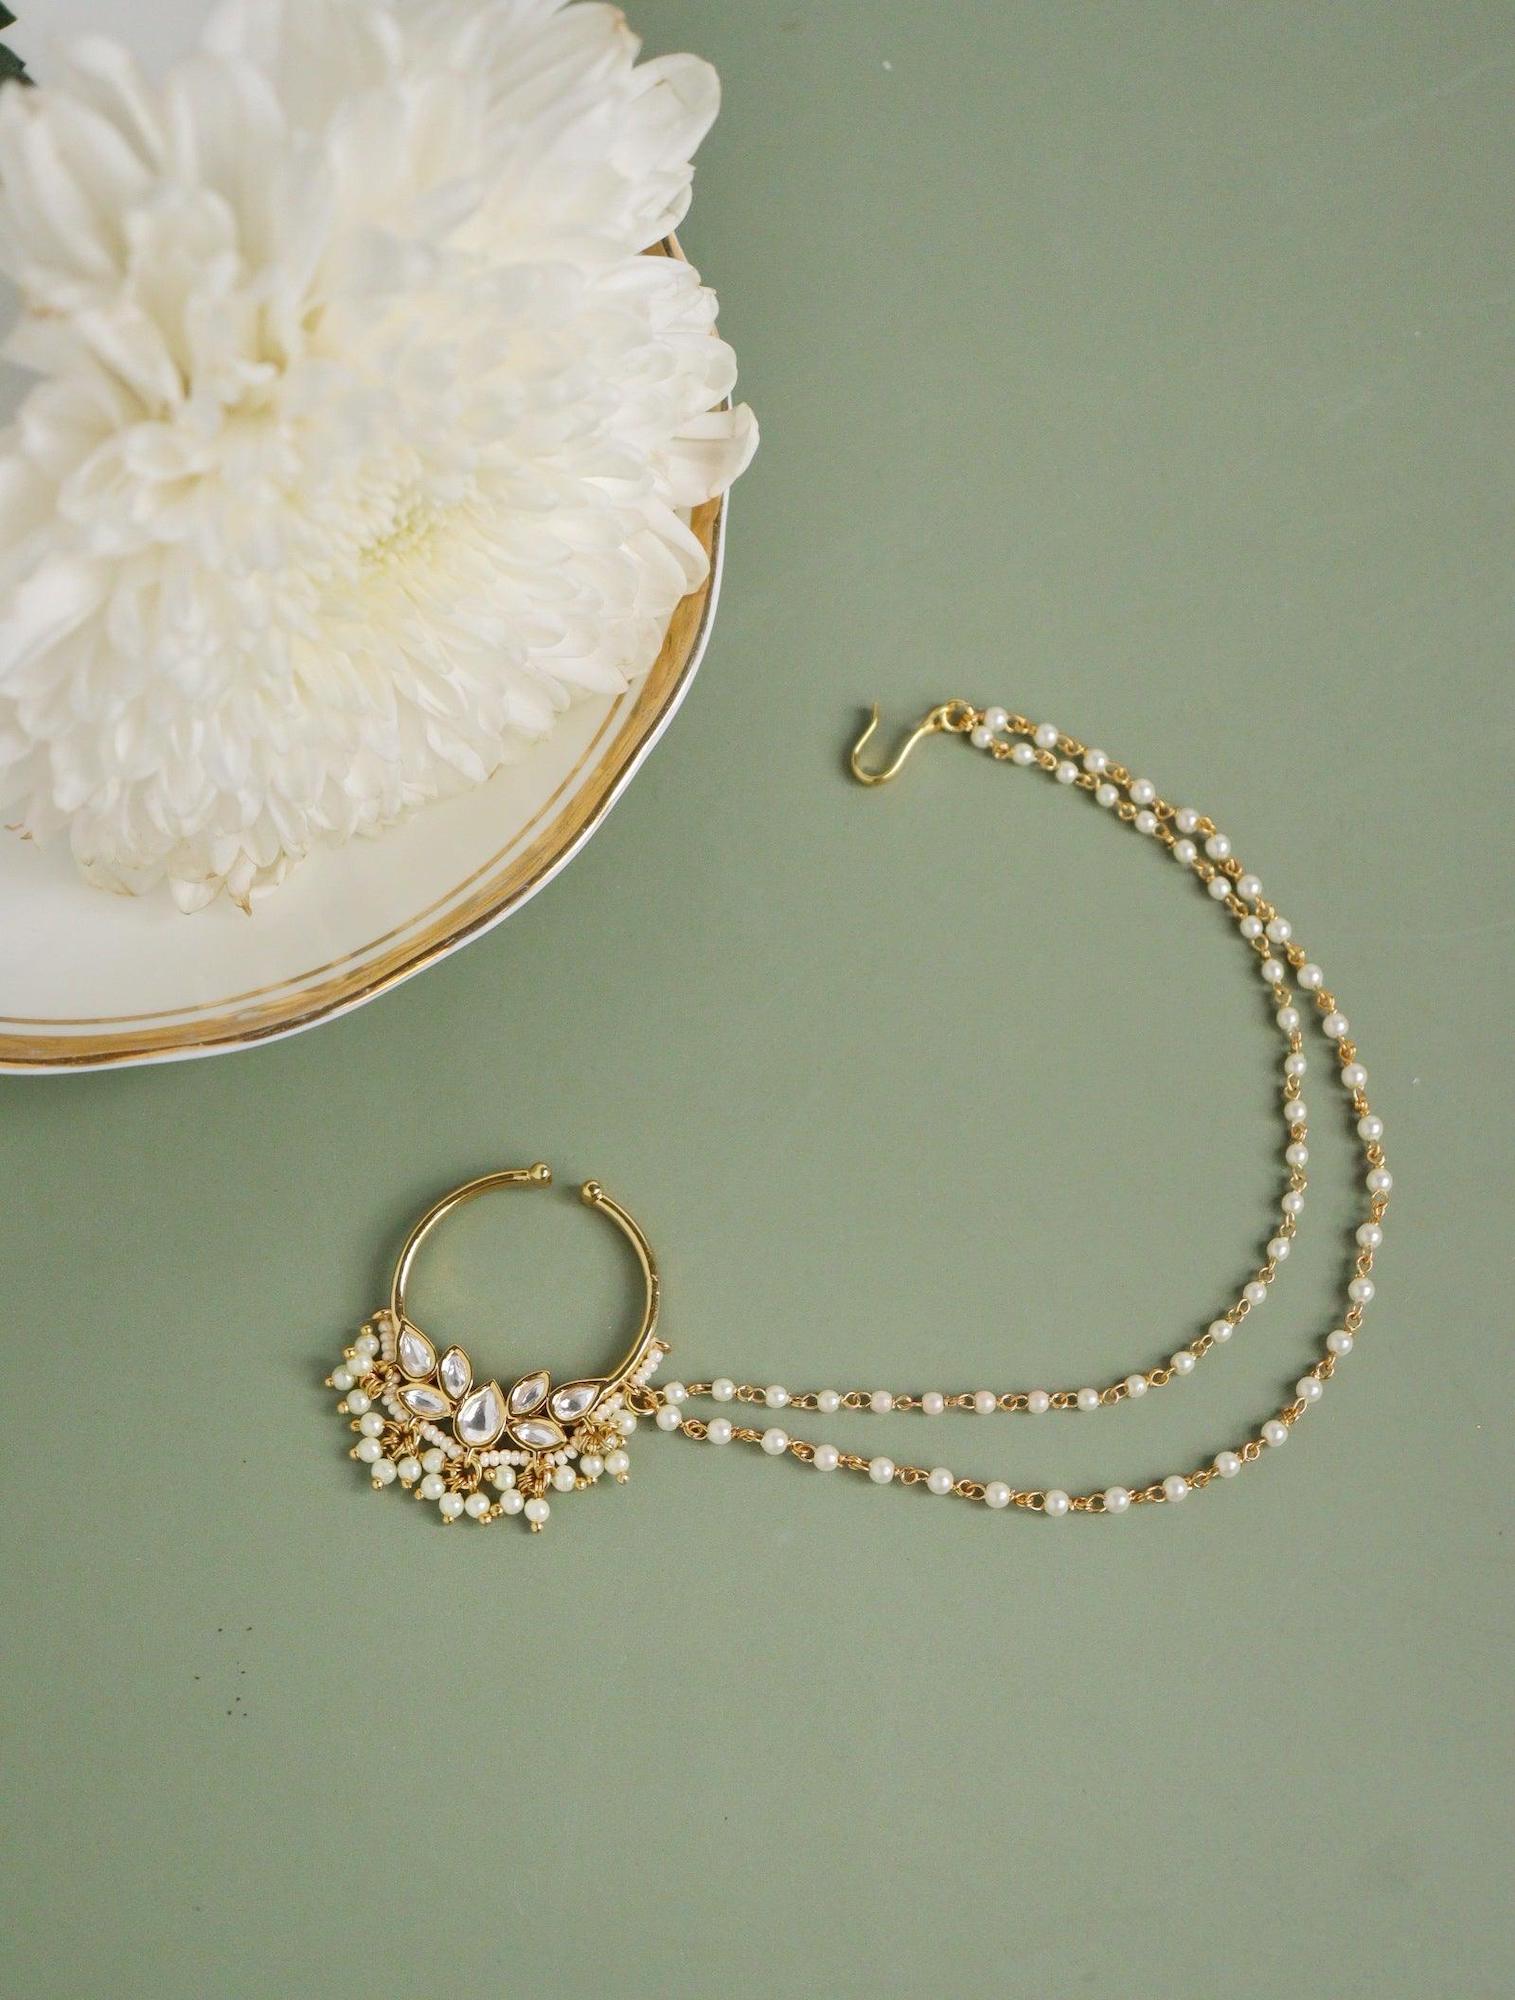 The Bridal Kundan and Pearls Embellished Nath 